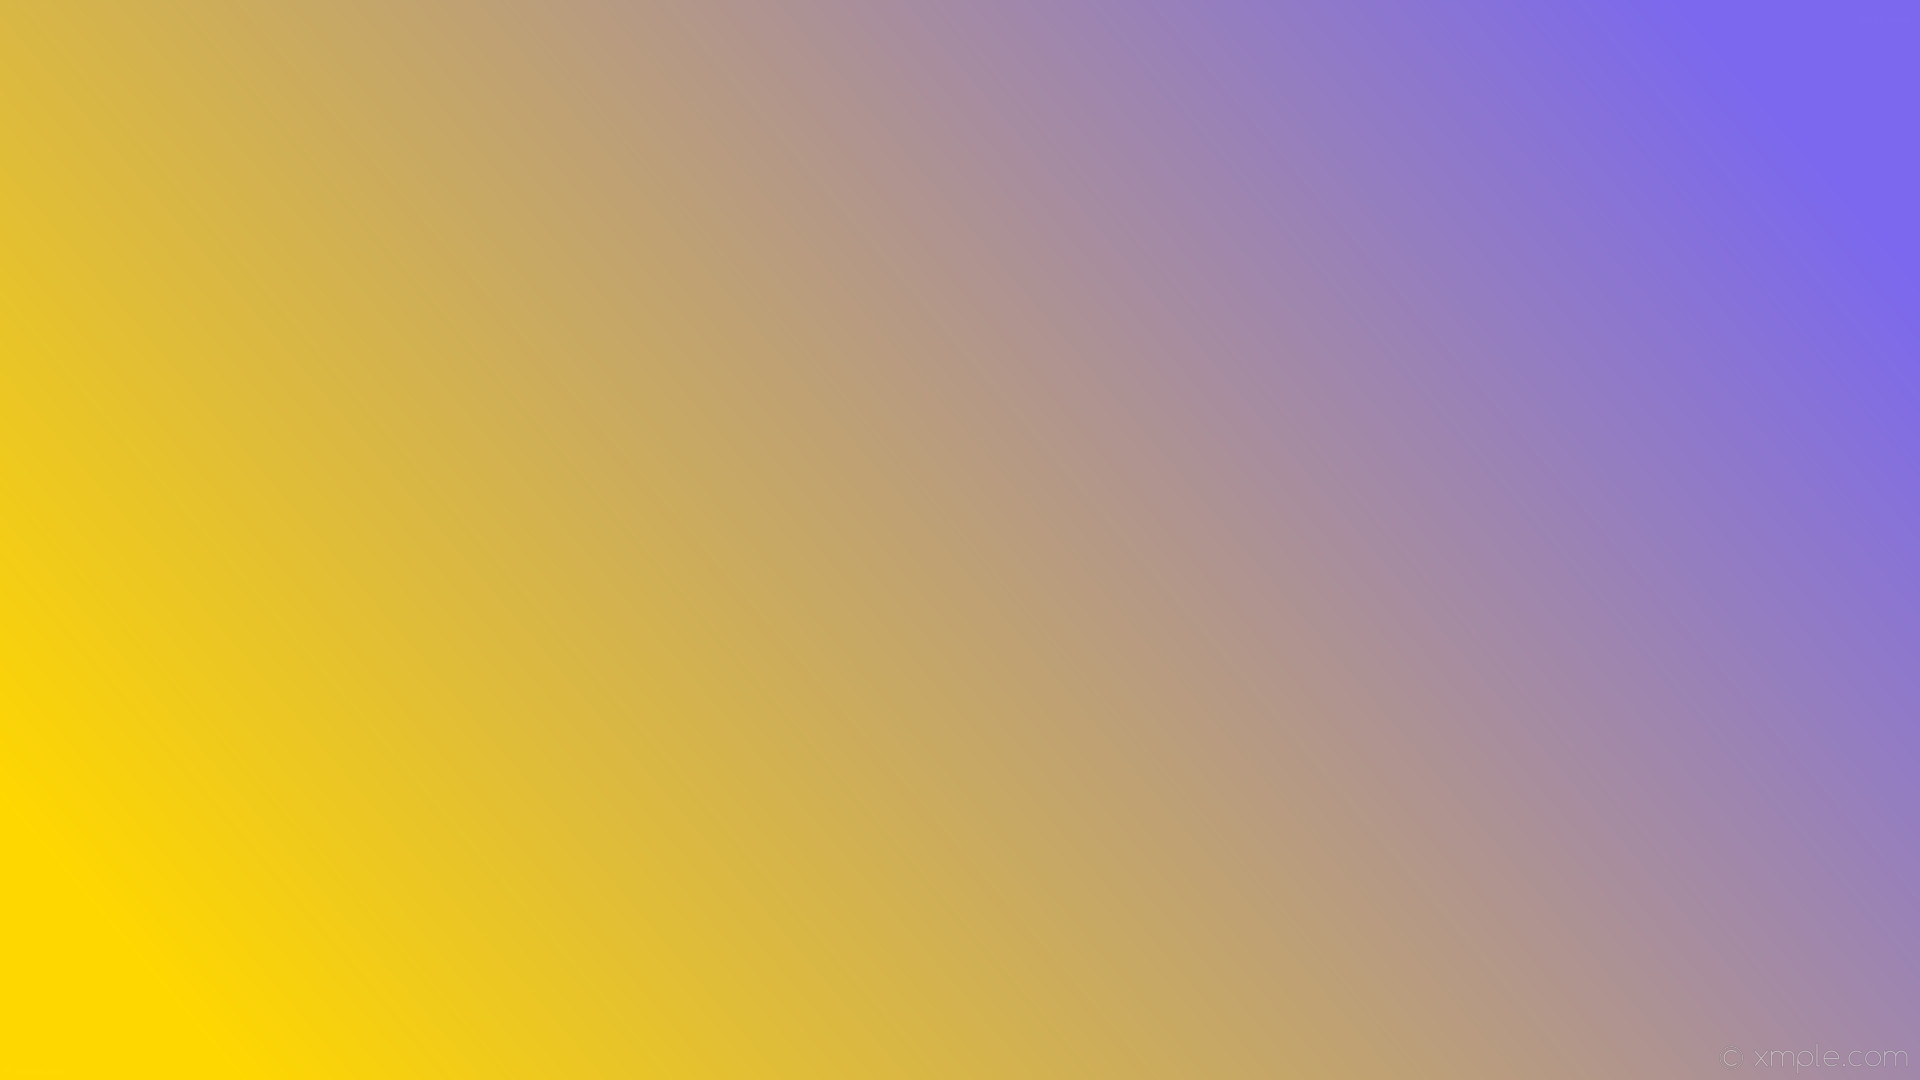 1920x1080 wallpaper yellow gradient linear purple gold medium slate blue #ffd700  #7b68ee 195Â°